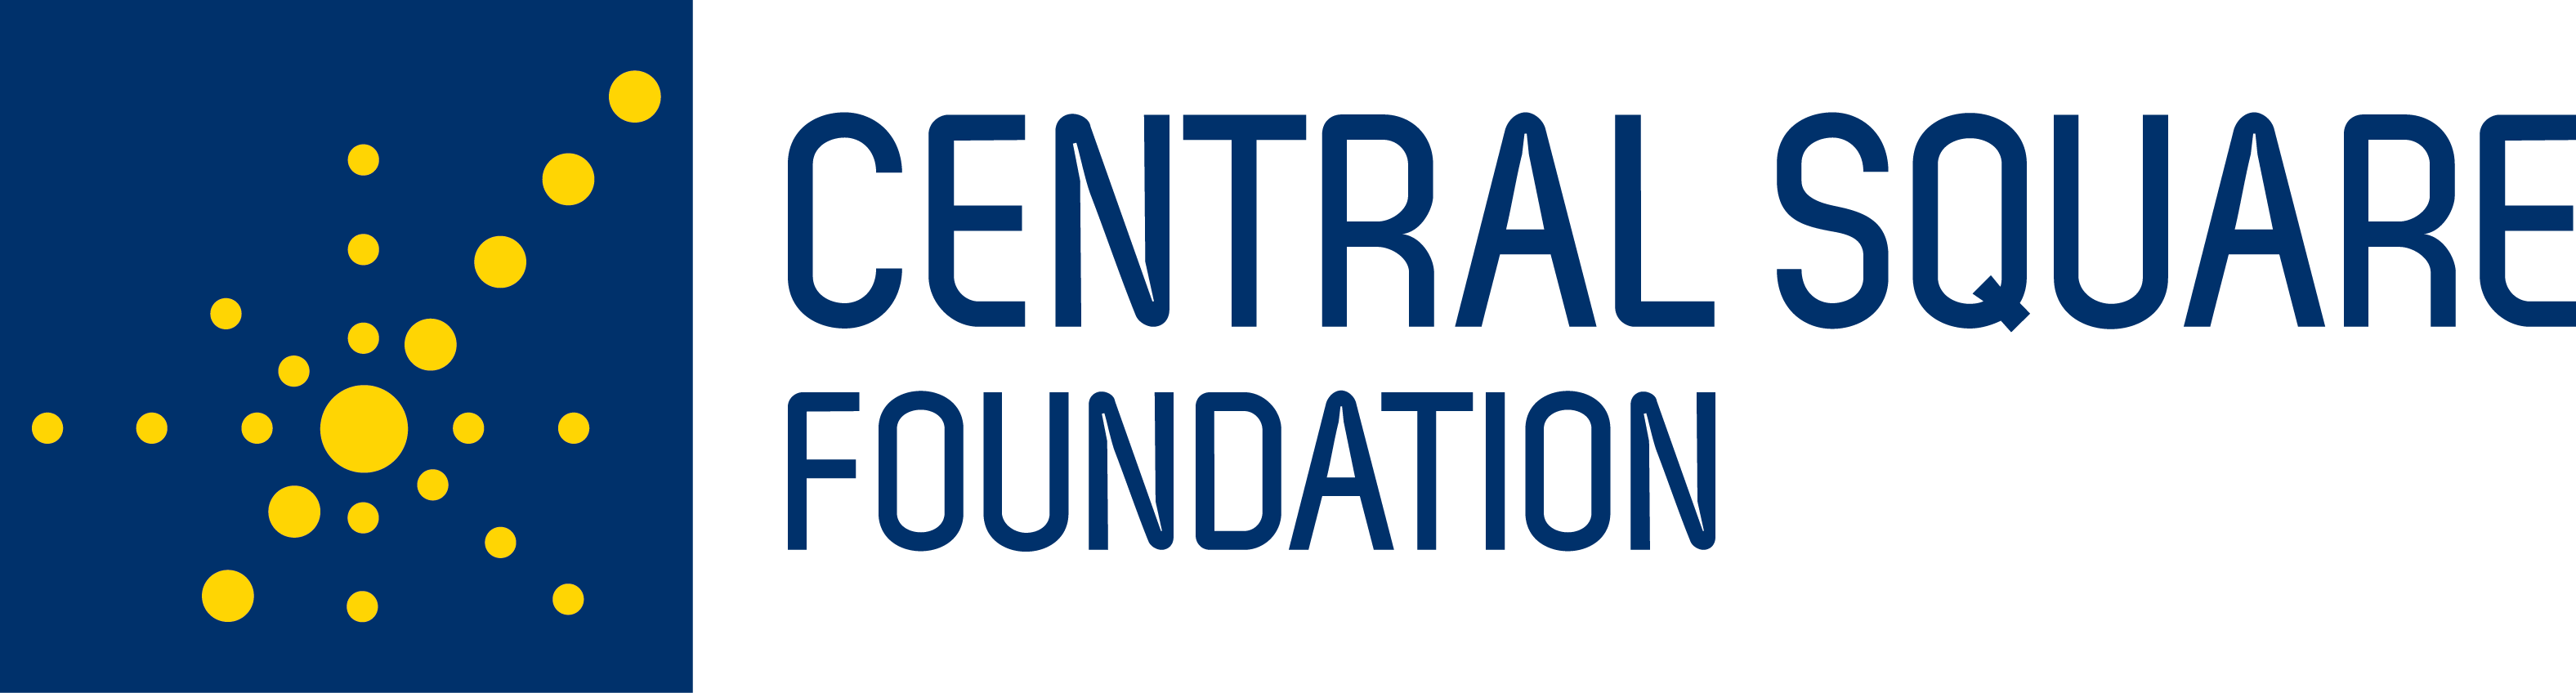 Central Square Foundation (CSF)